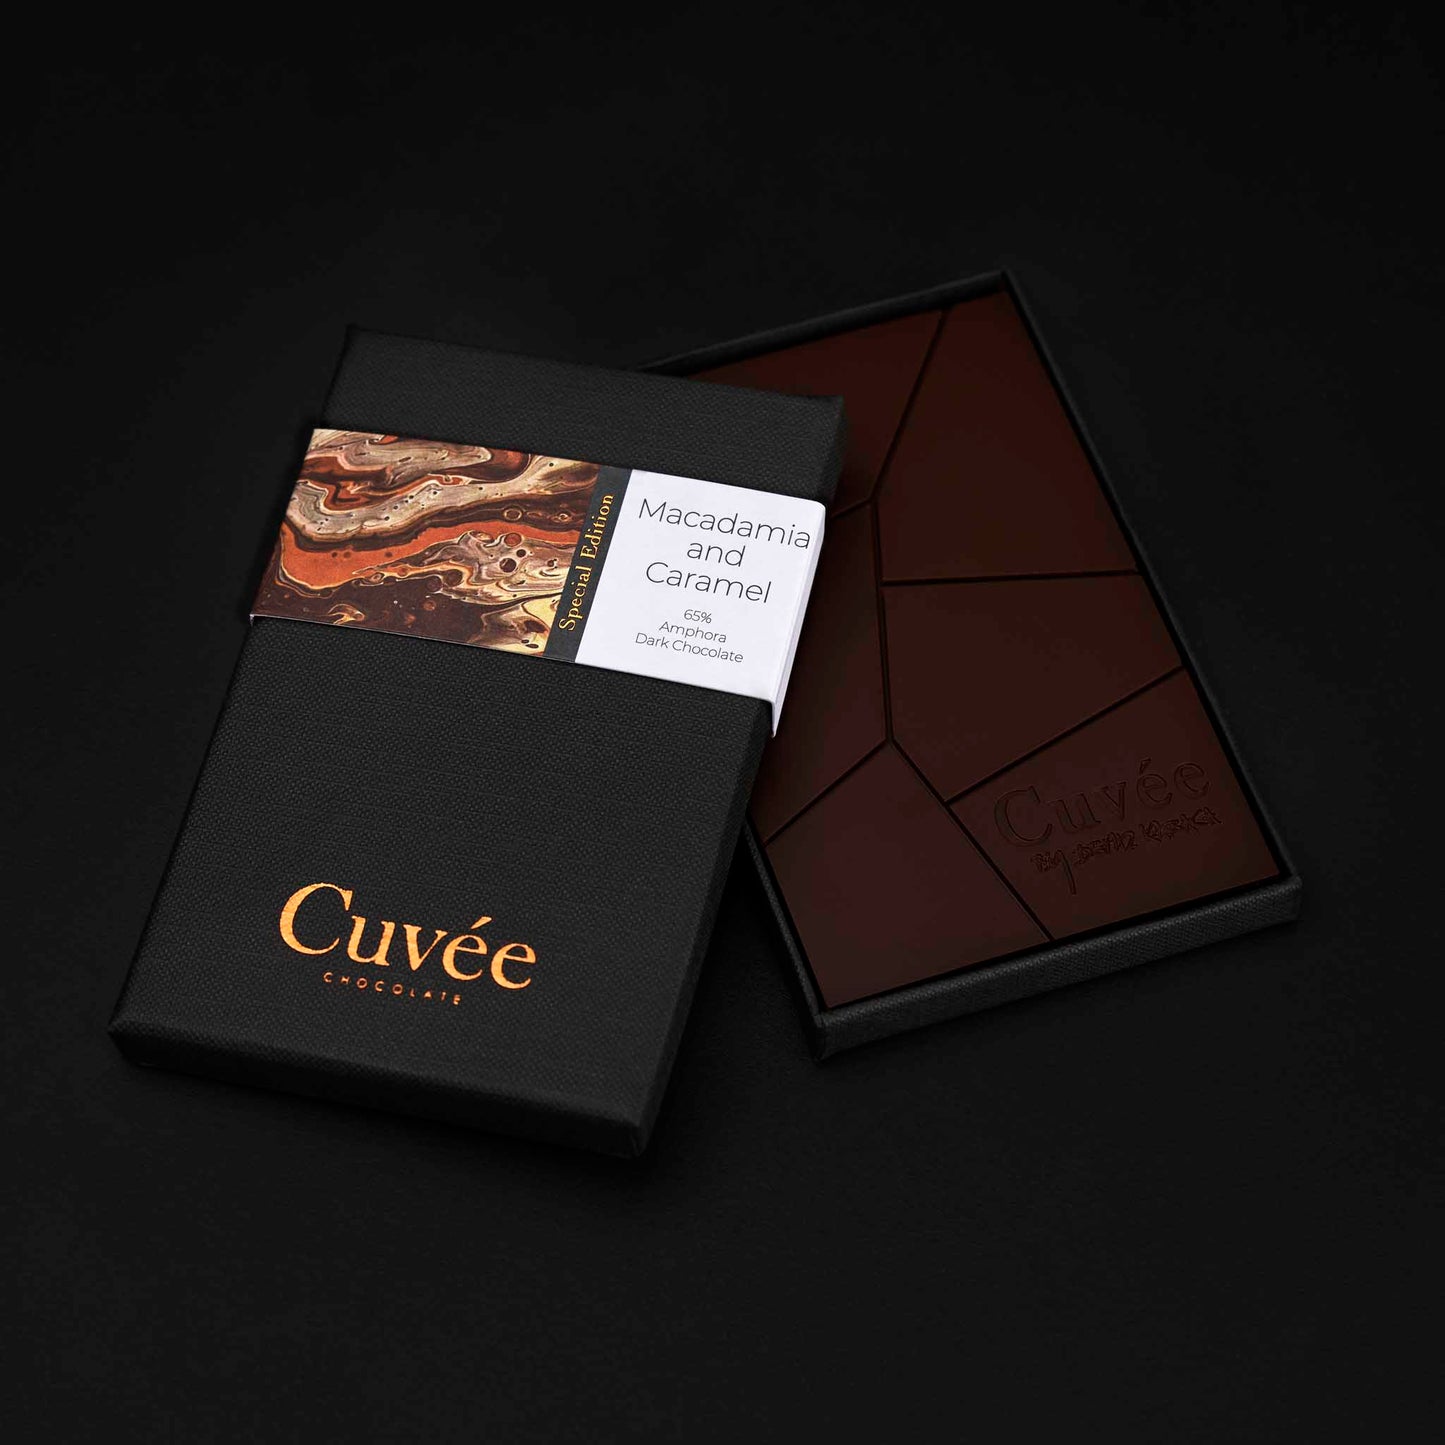 Cuvee Chocolate - Macadamia and Caramel (Special Edition)